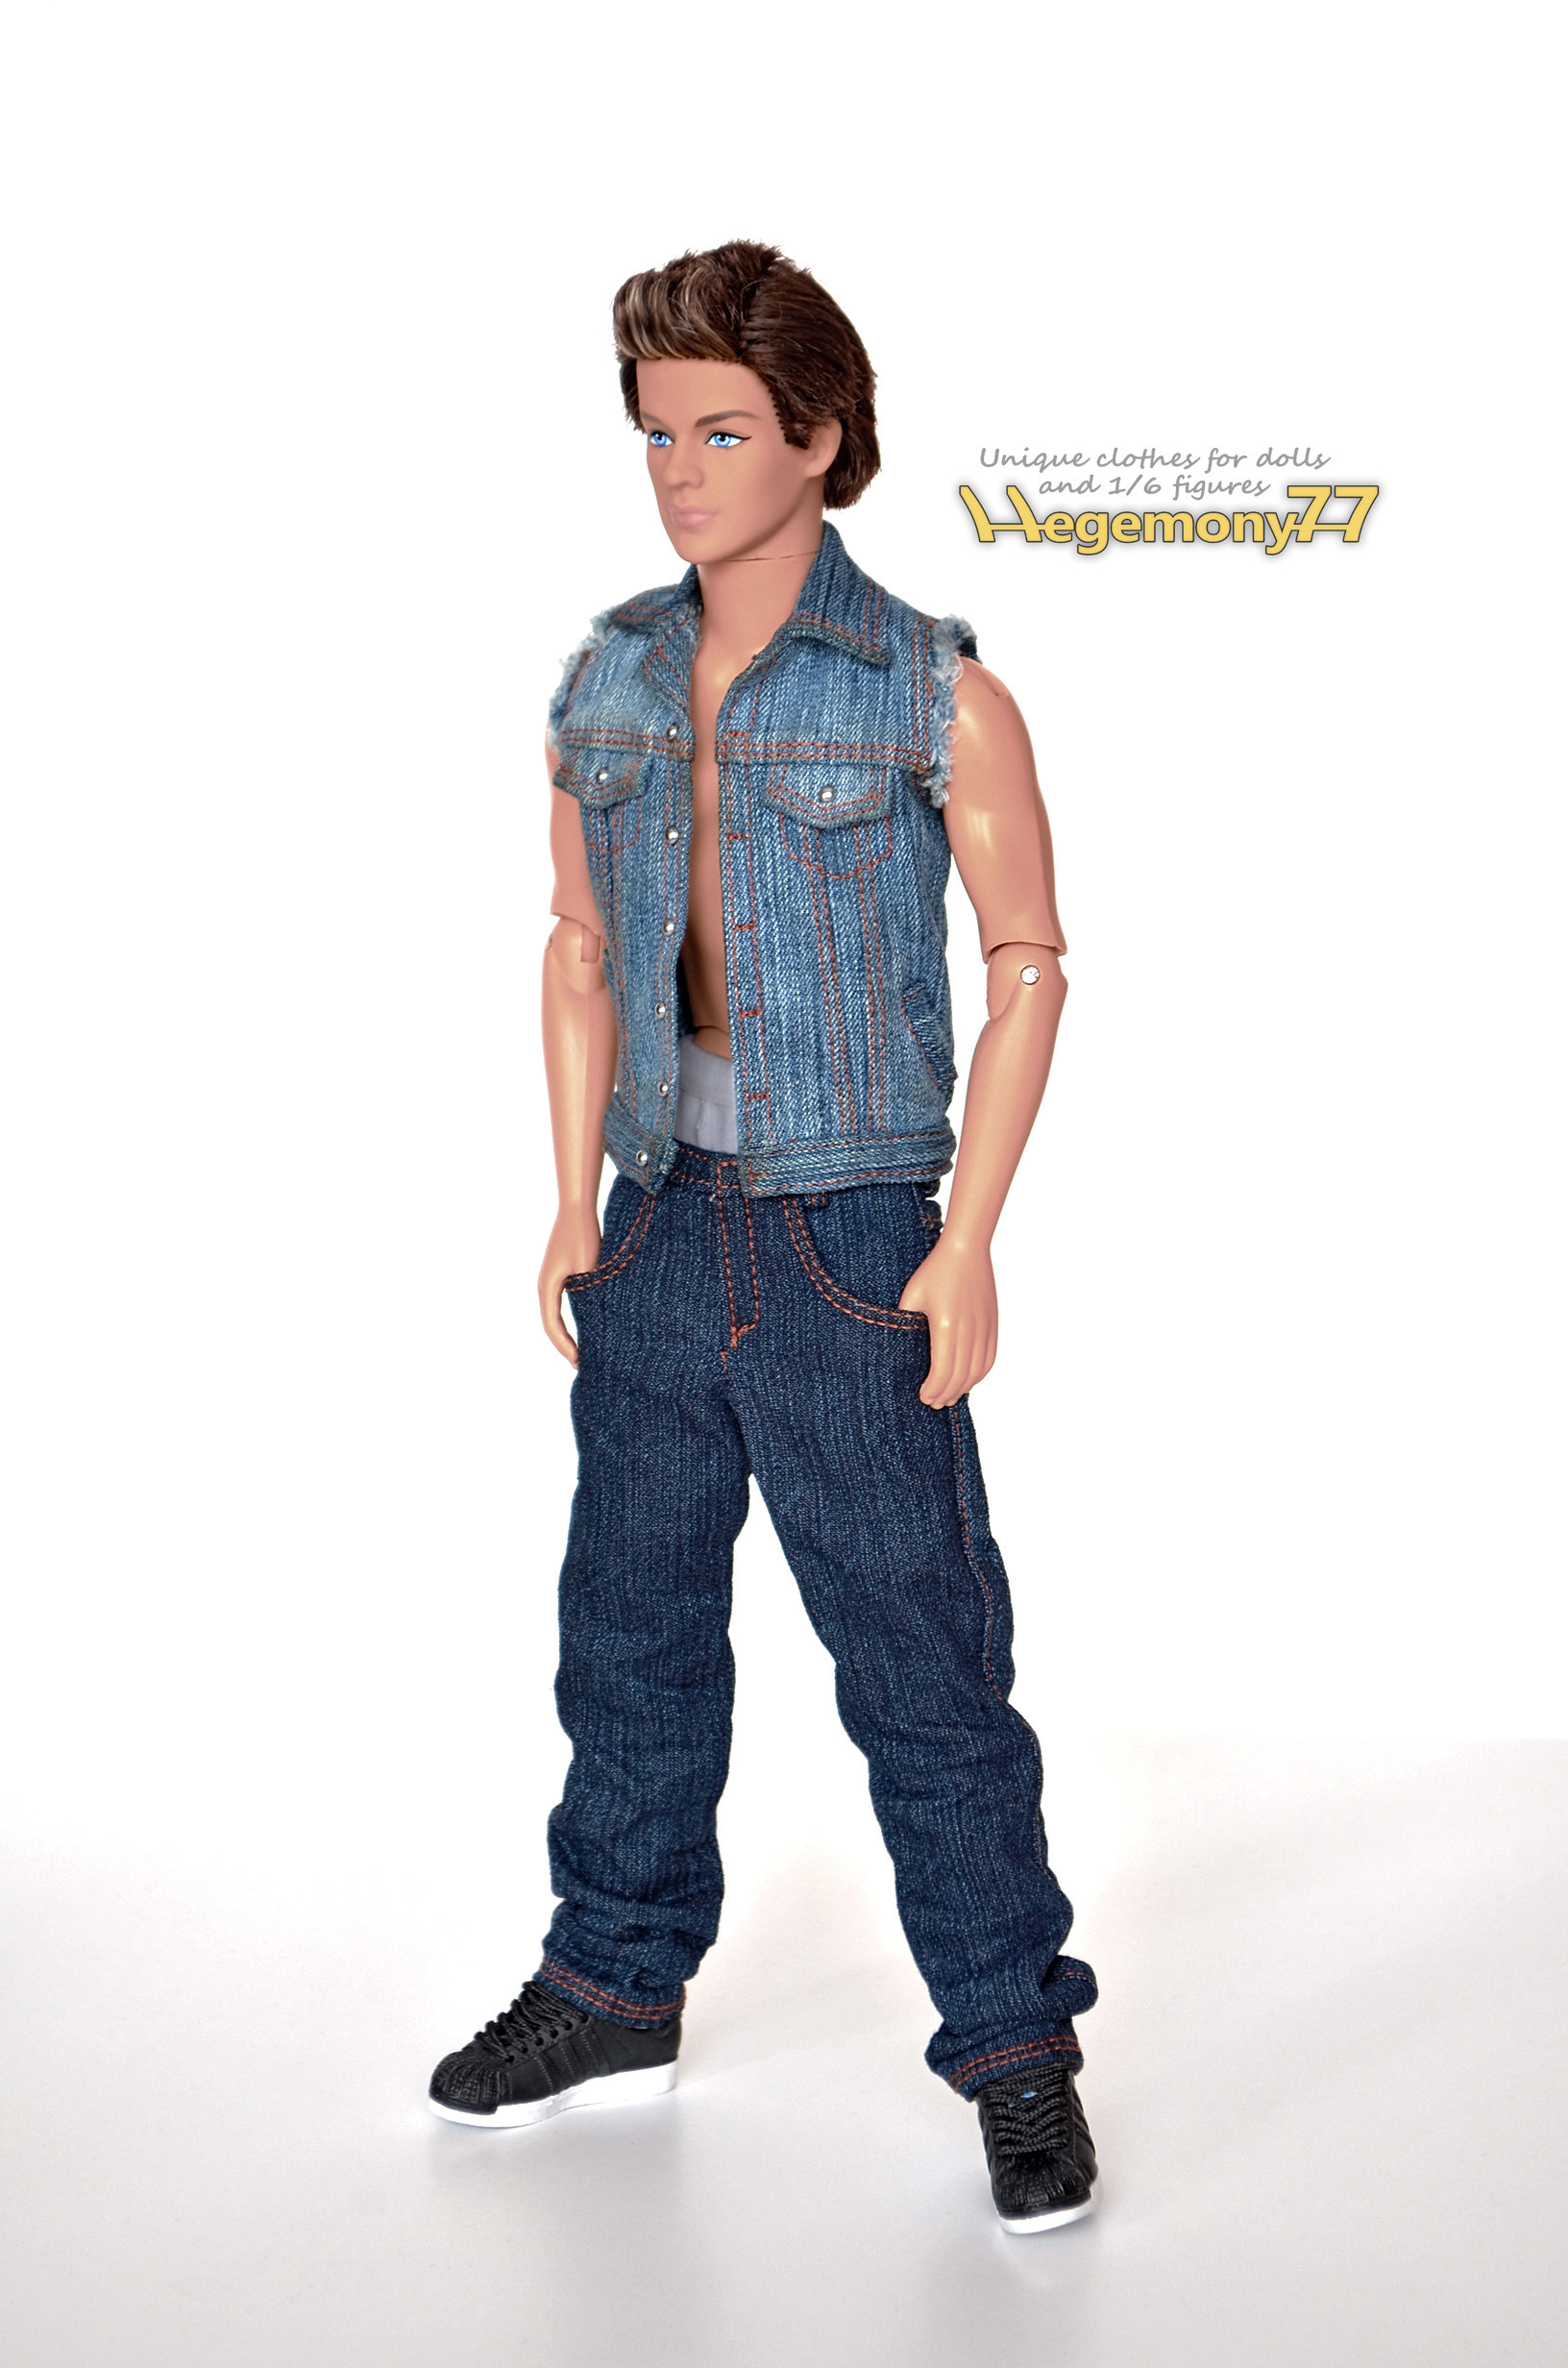 Ken in custom jean jacket and hip jeans by Hegemony77 on DeviantArt